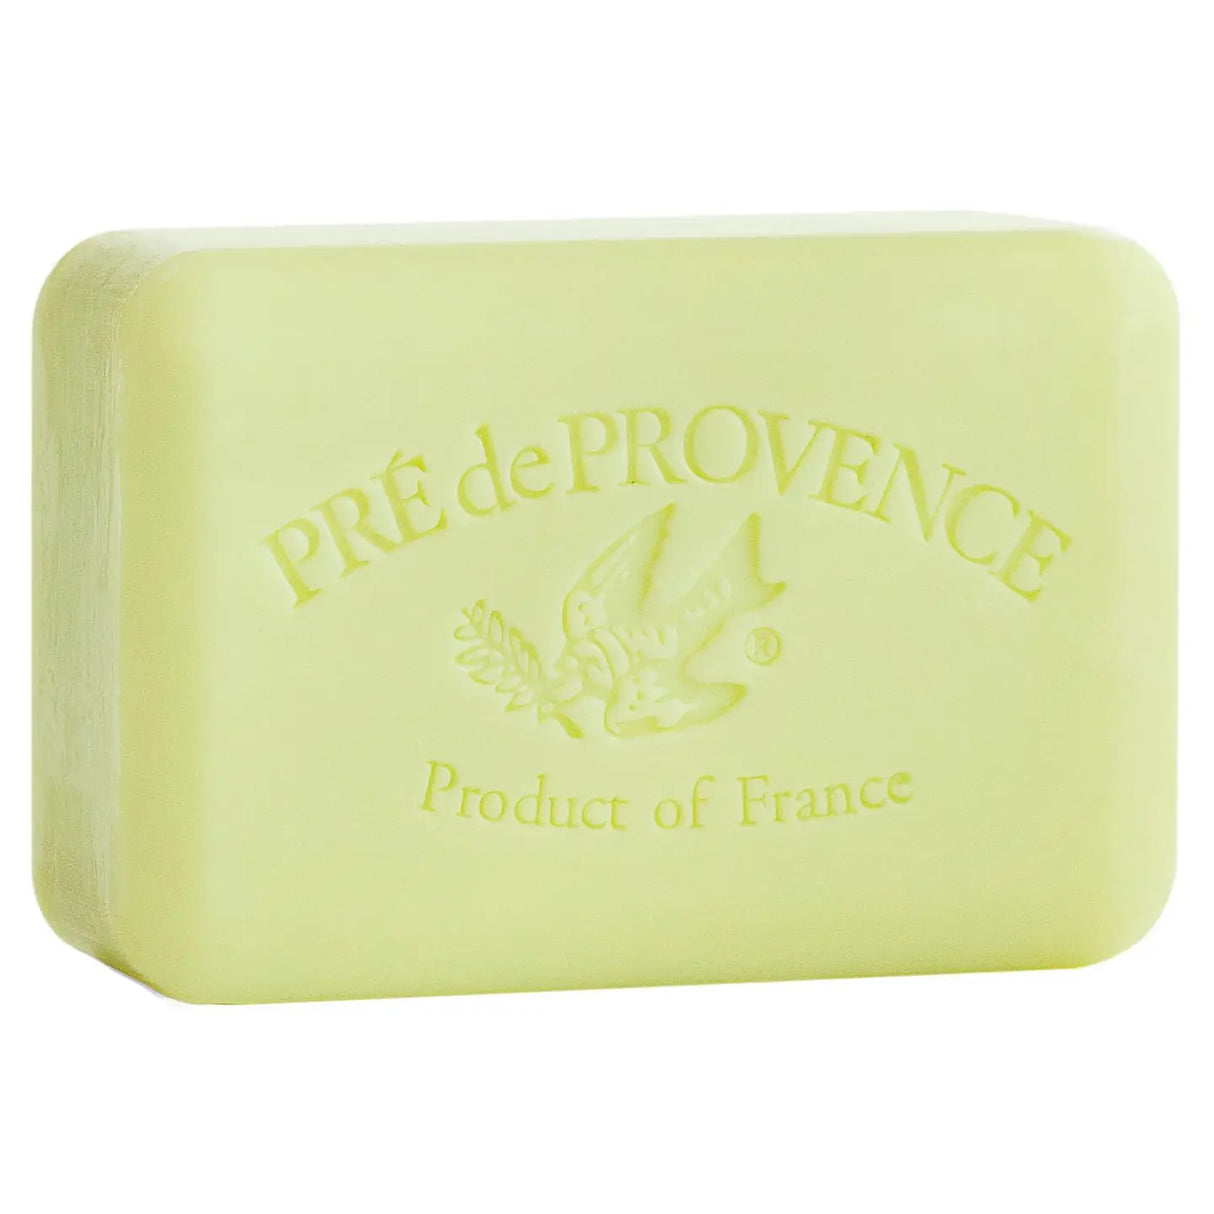 Pre de Provence - Linden - Soap Bar - 250g